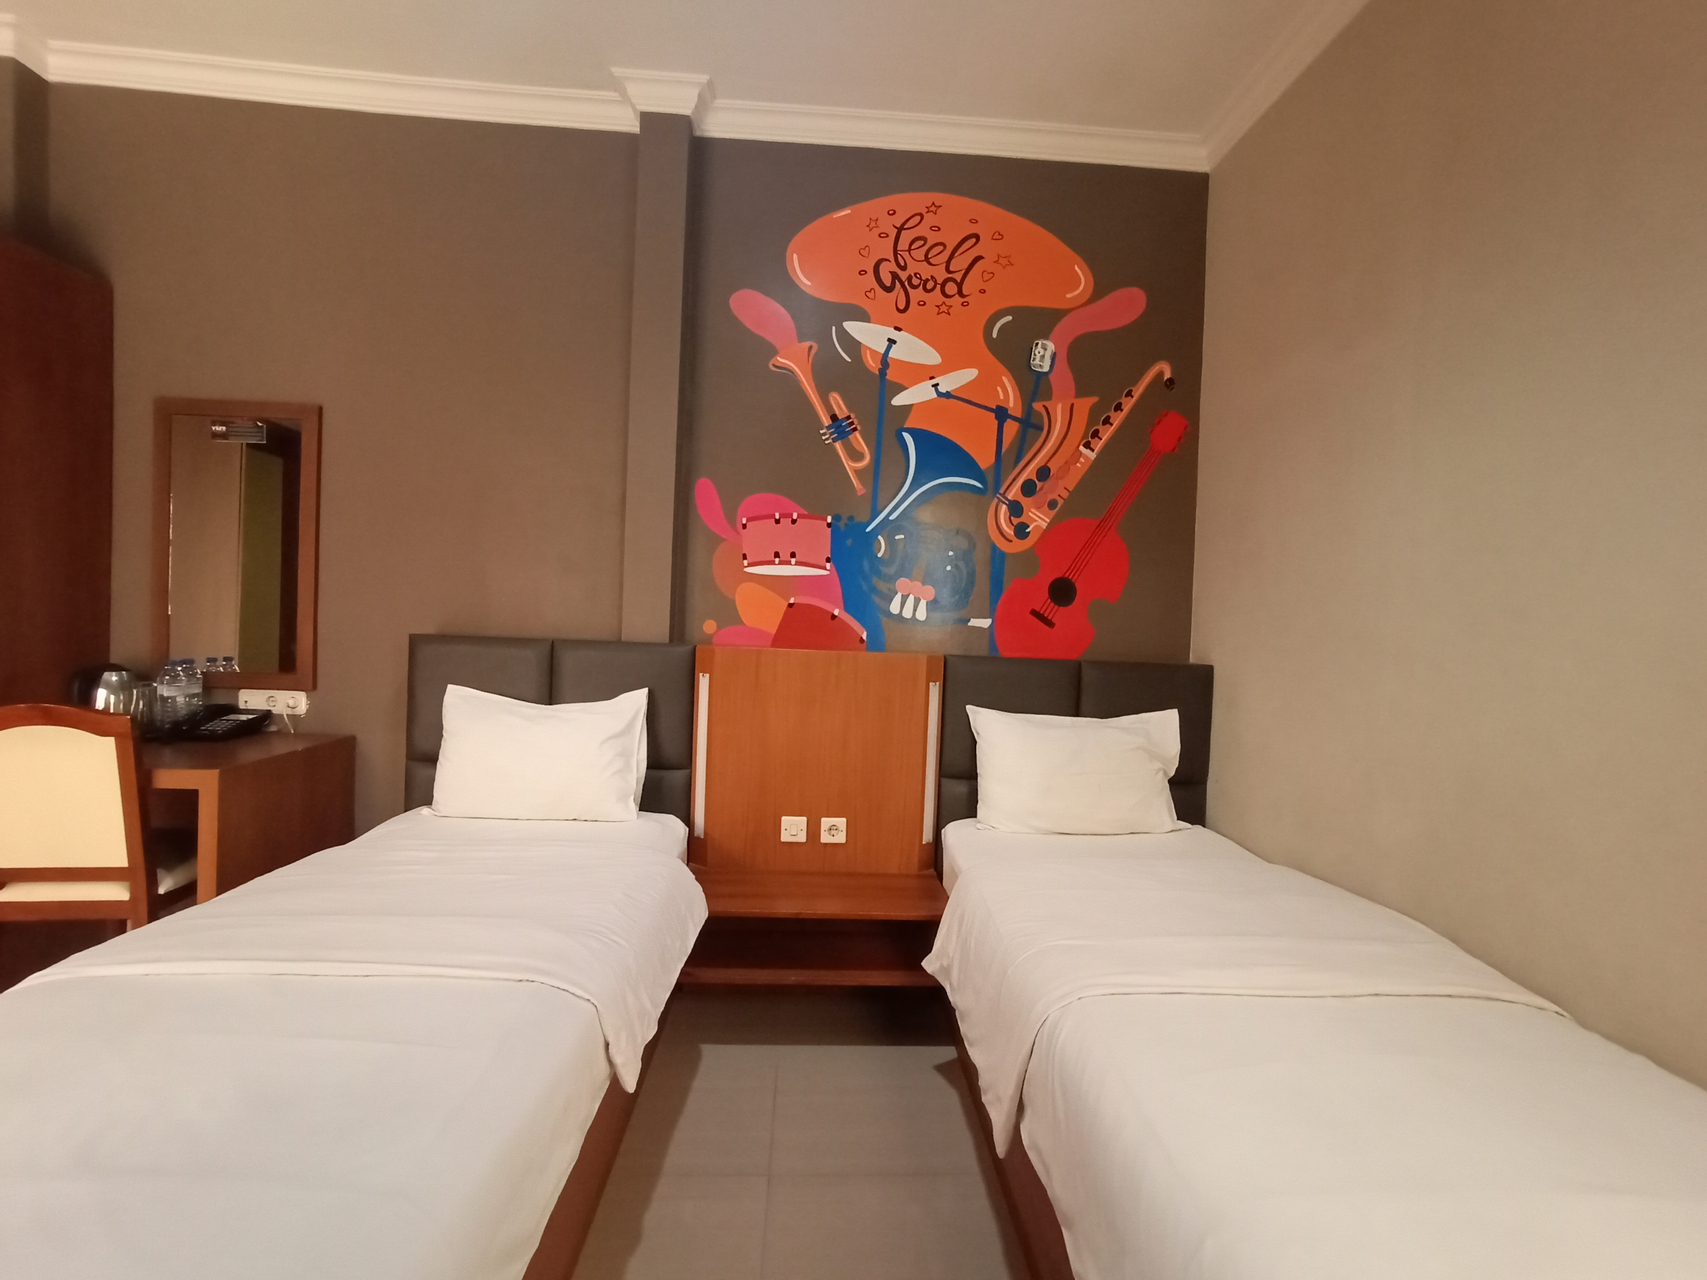 Bedroom 2, Votel Viure Hotel Jogja, Yogyakarta